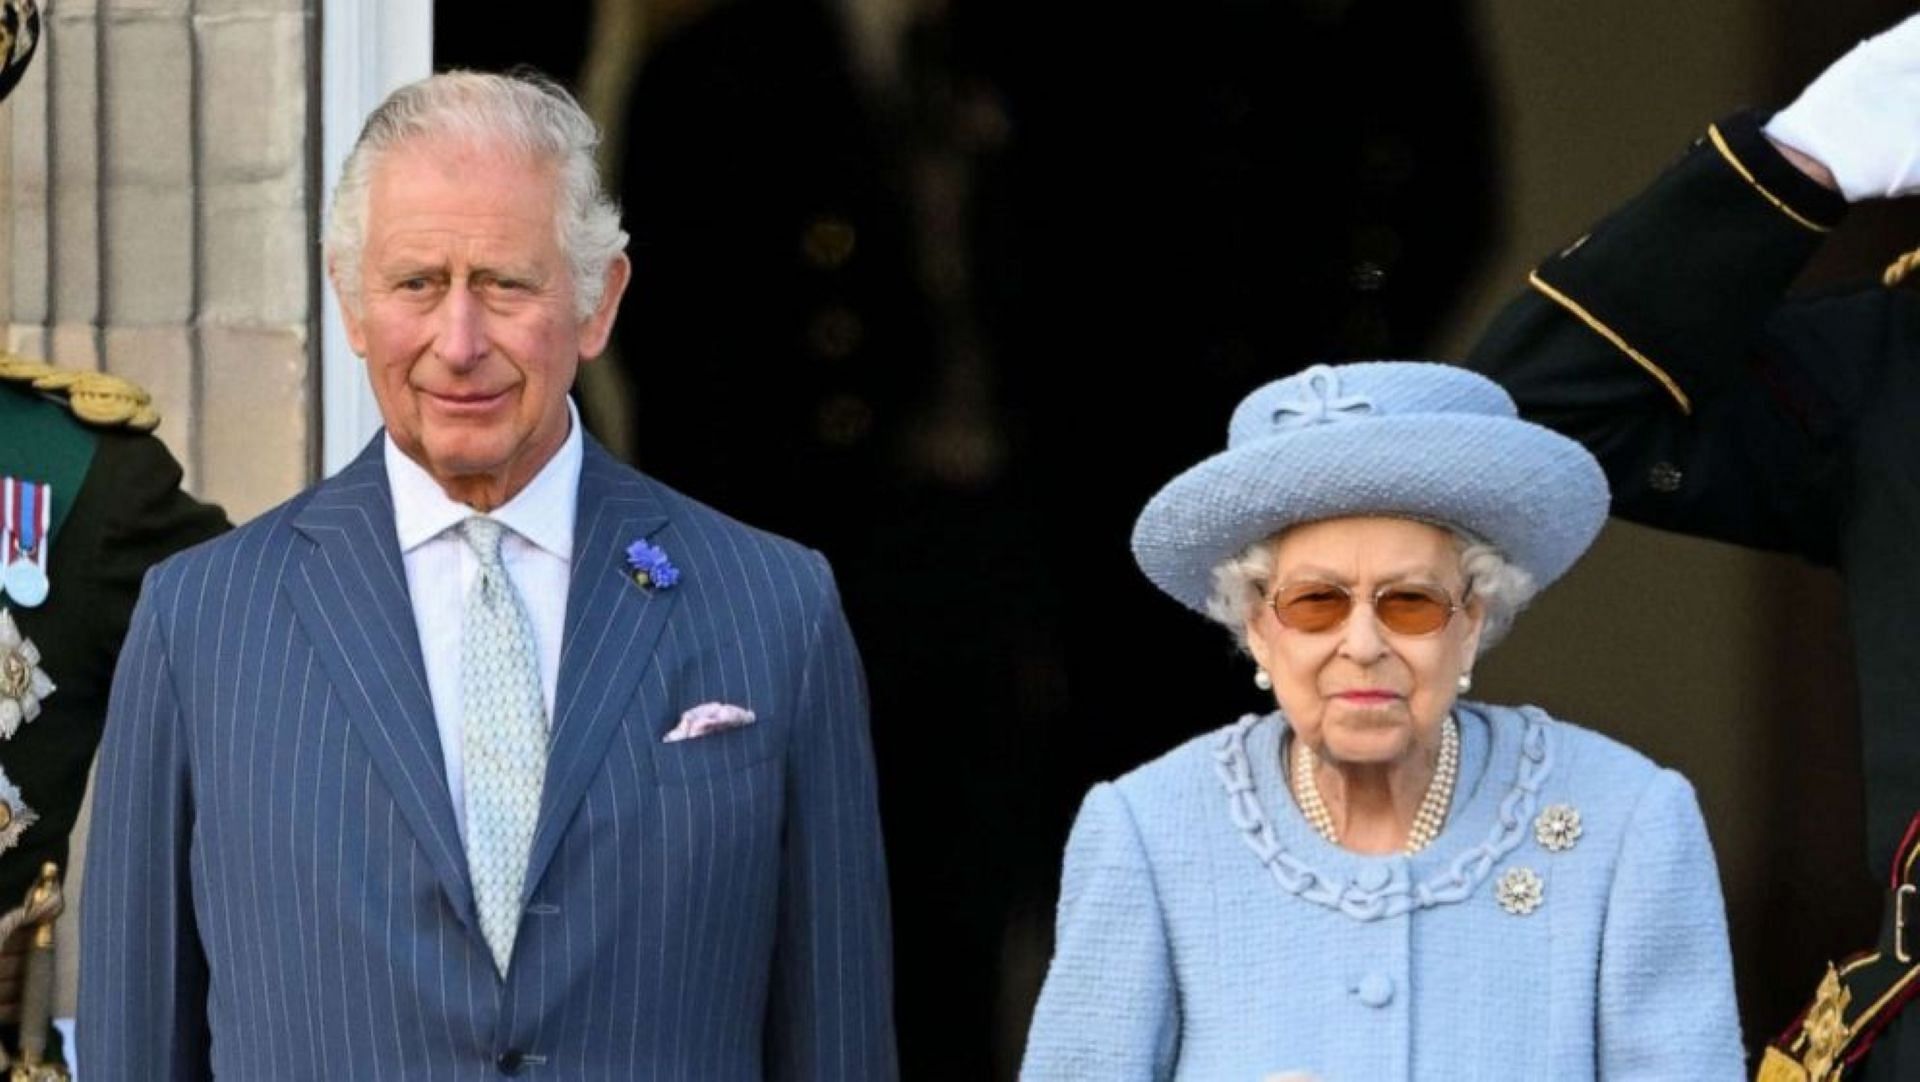 Queen Elizabeth and Charles III (Image via ABC)